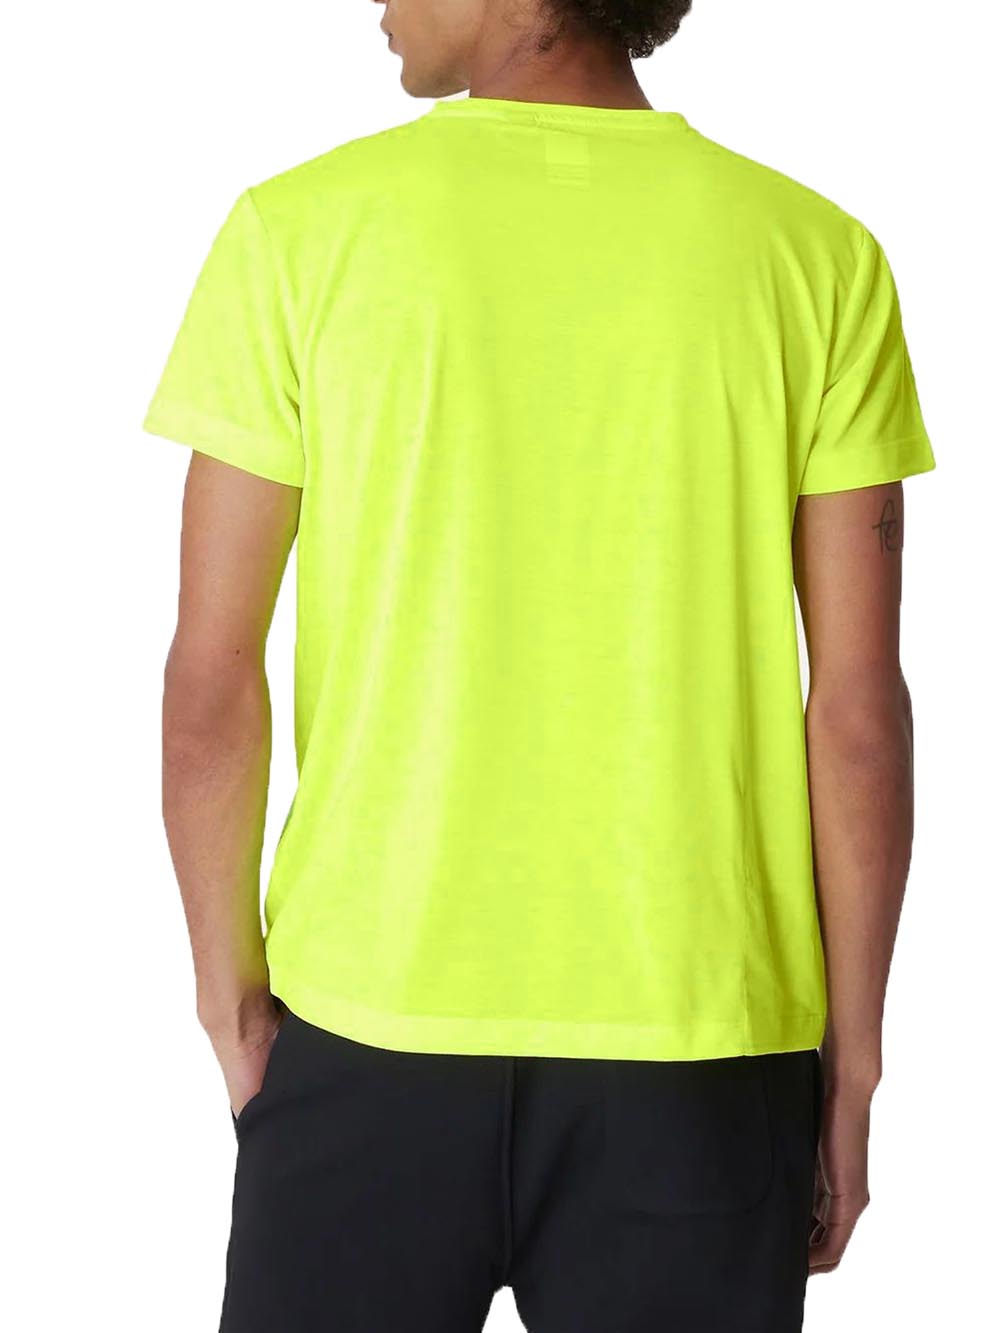 K-Way T-shirt Uomo Giallo fluo